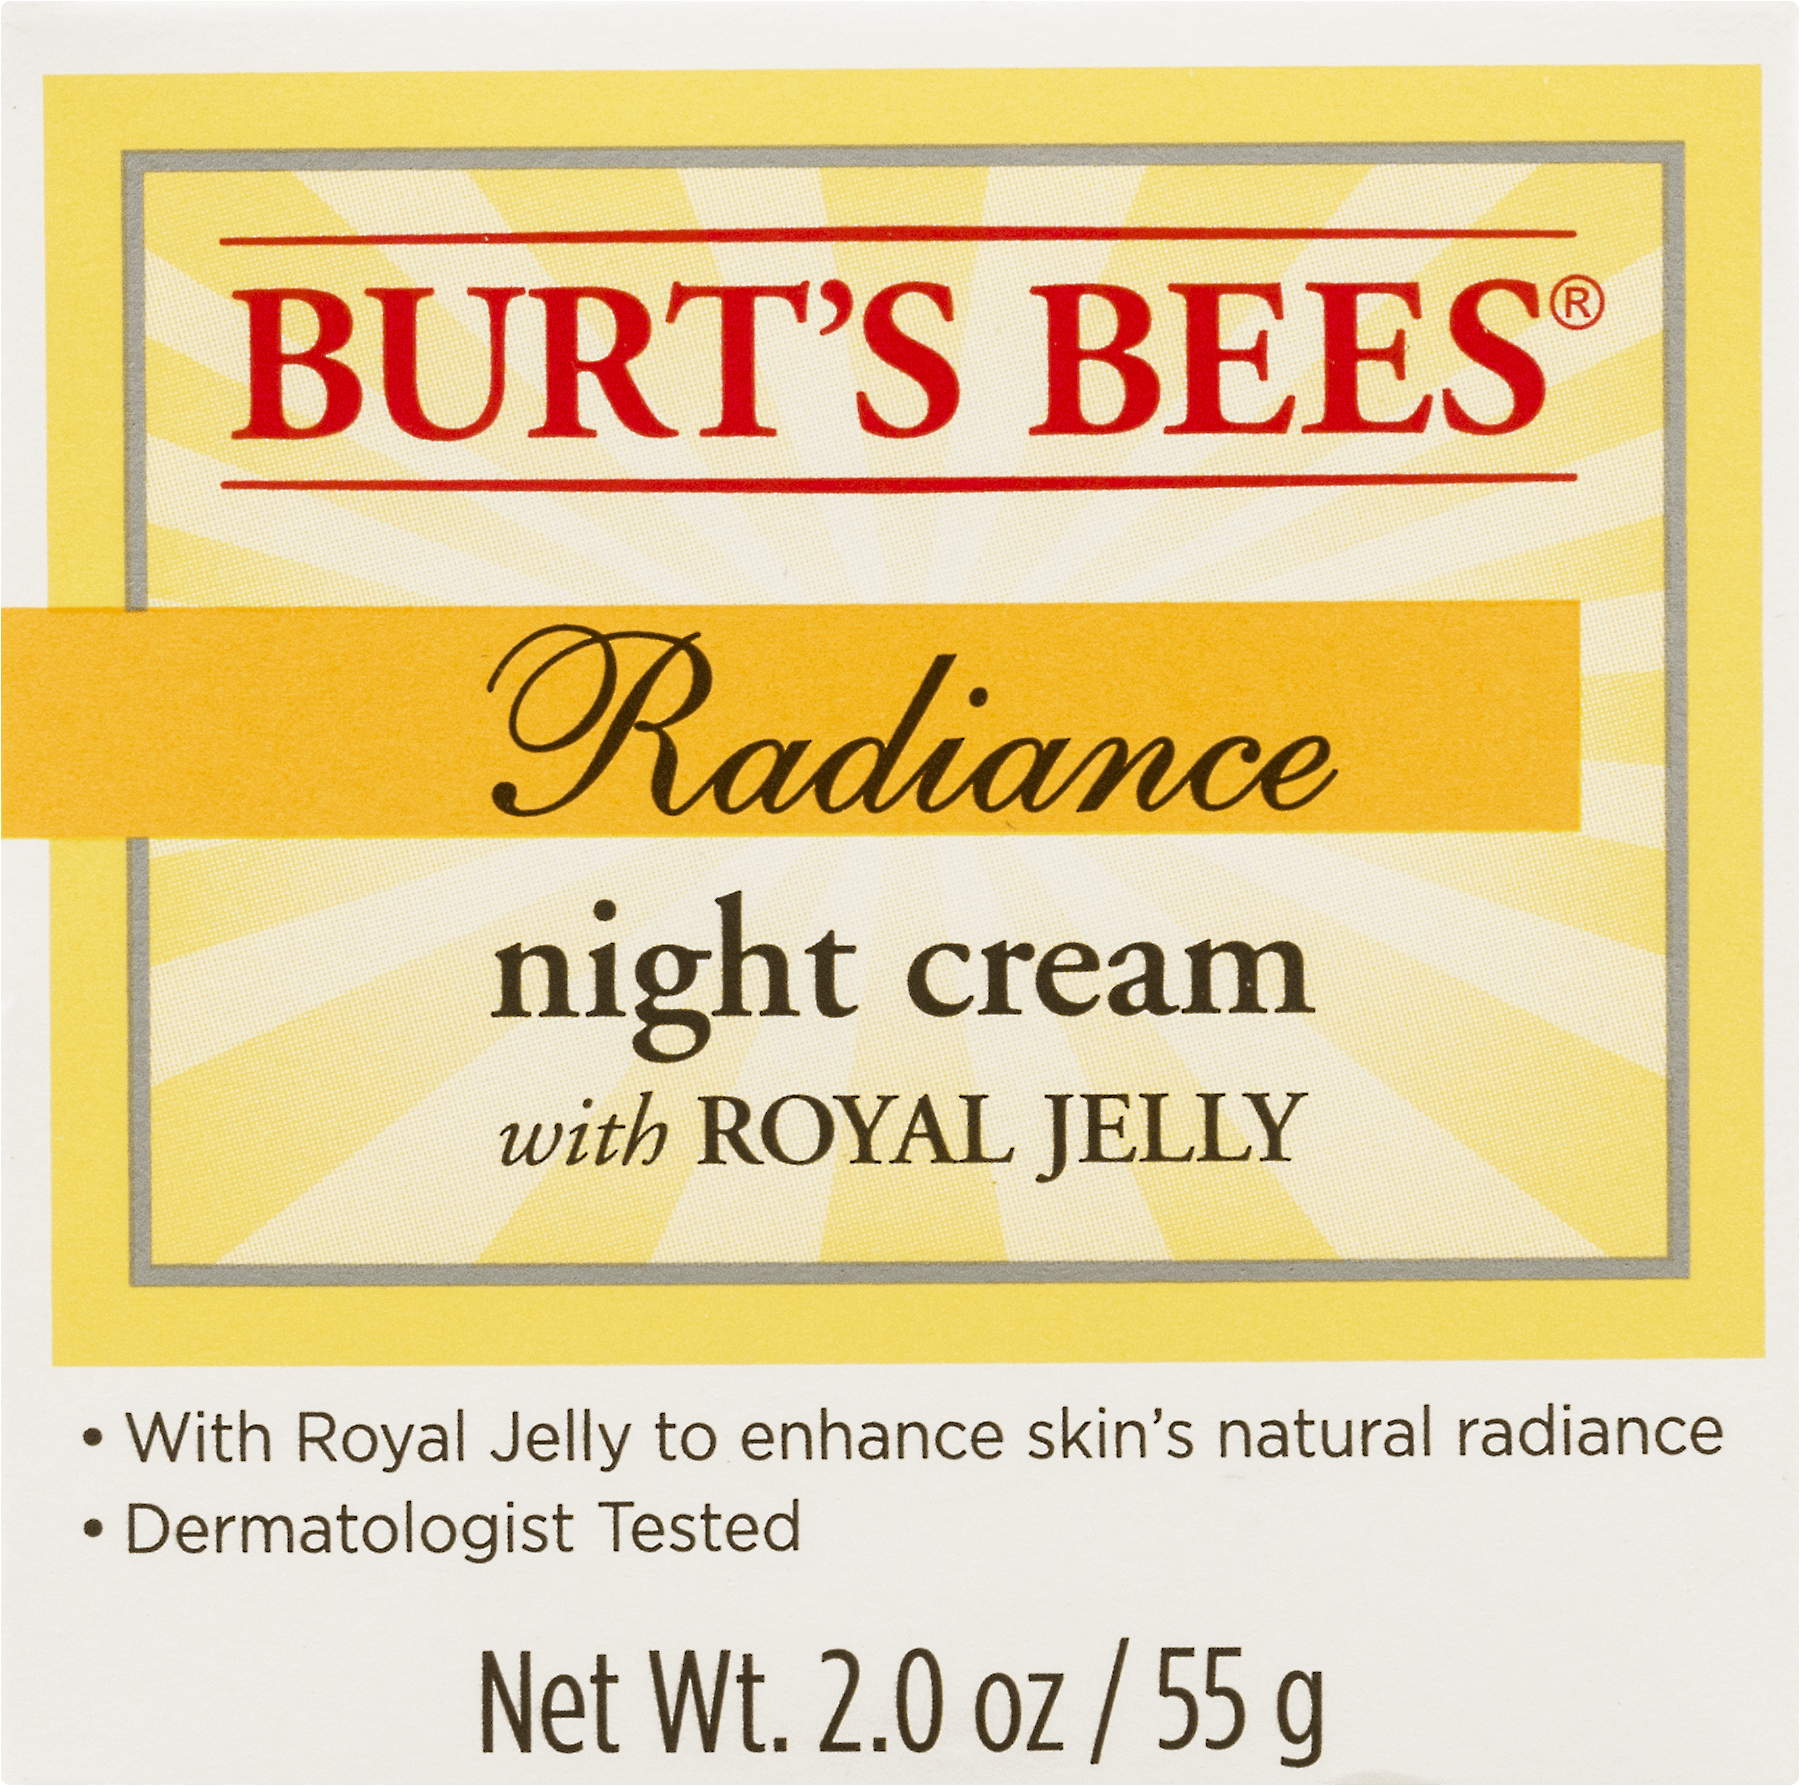 Burt's Bees Radiance Night Cream, 2 oz - image 2 of 9